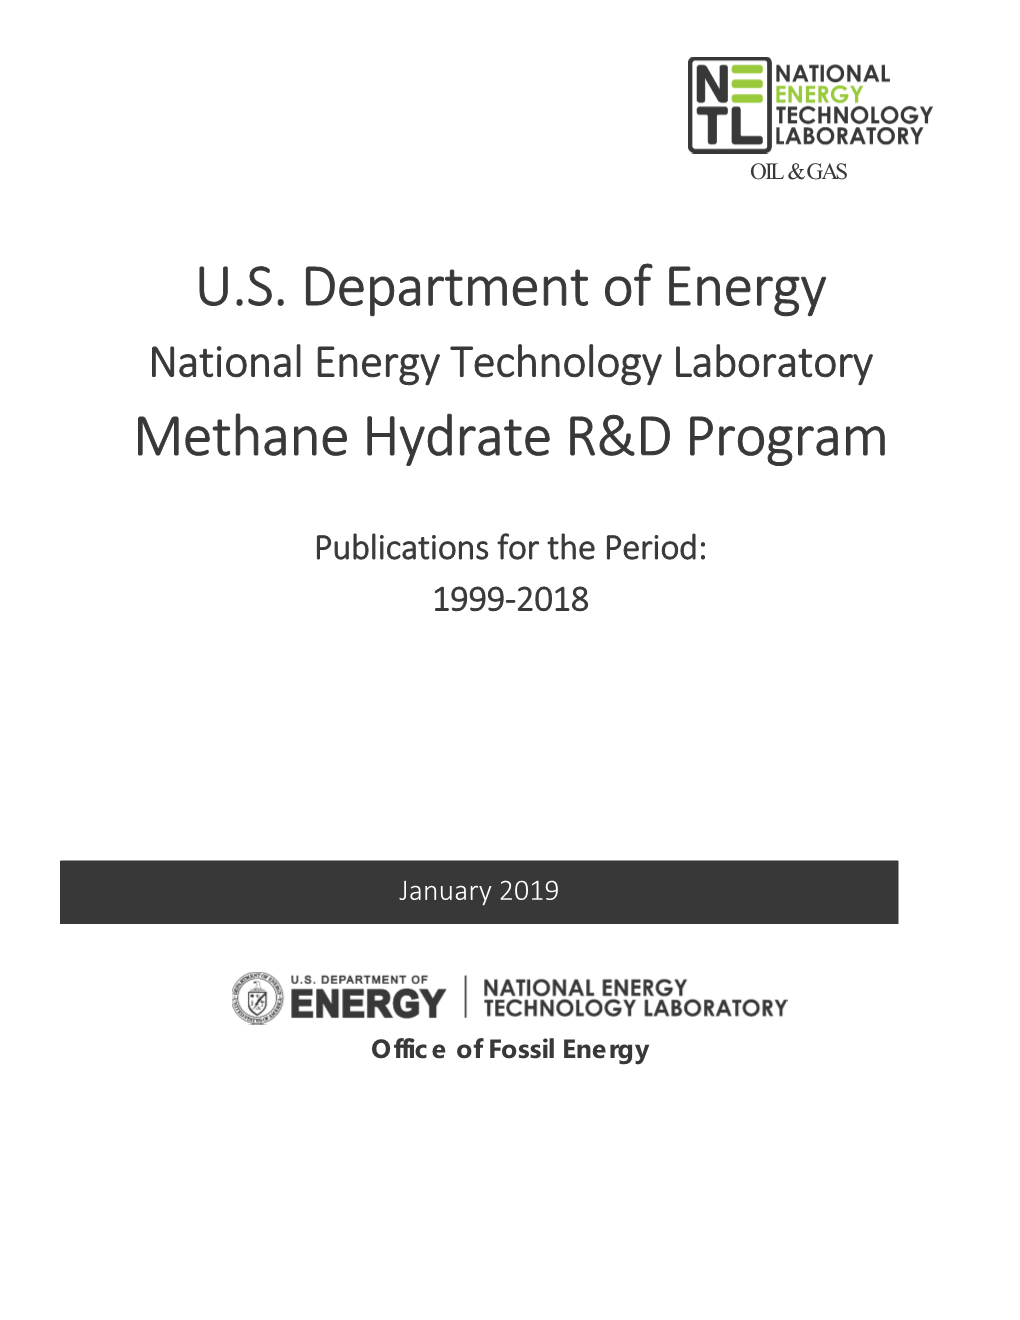 U.S. Department of Energy Methane Hydrate R&D Program